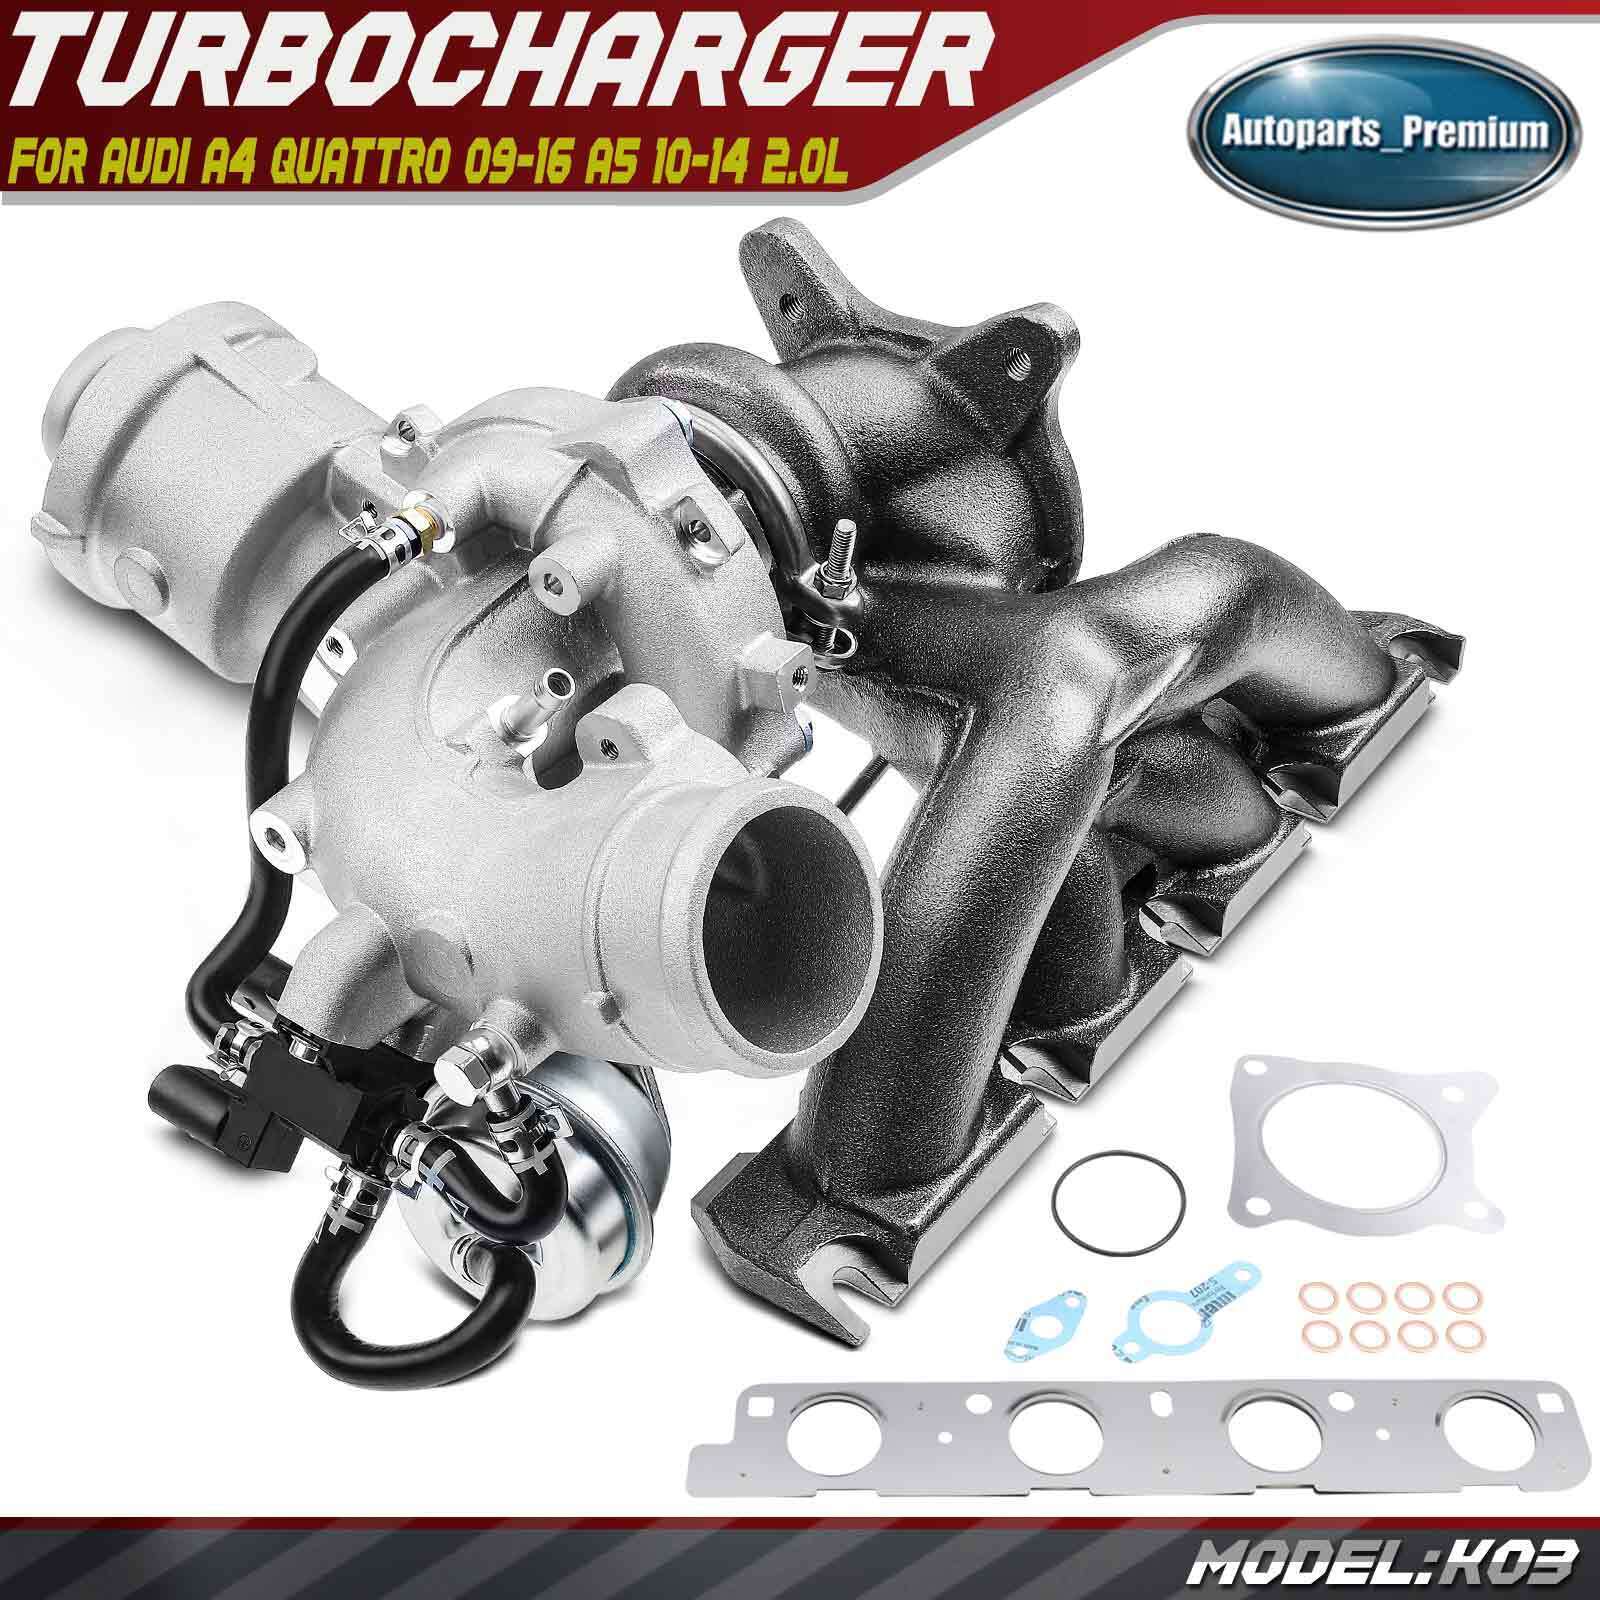 Turbo Turbocharger for Audi A4 Quattro 09-16 A5 10-14 A6 allroad 2.0L TFSI K03